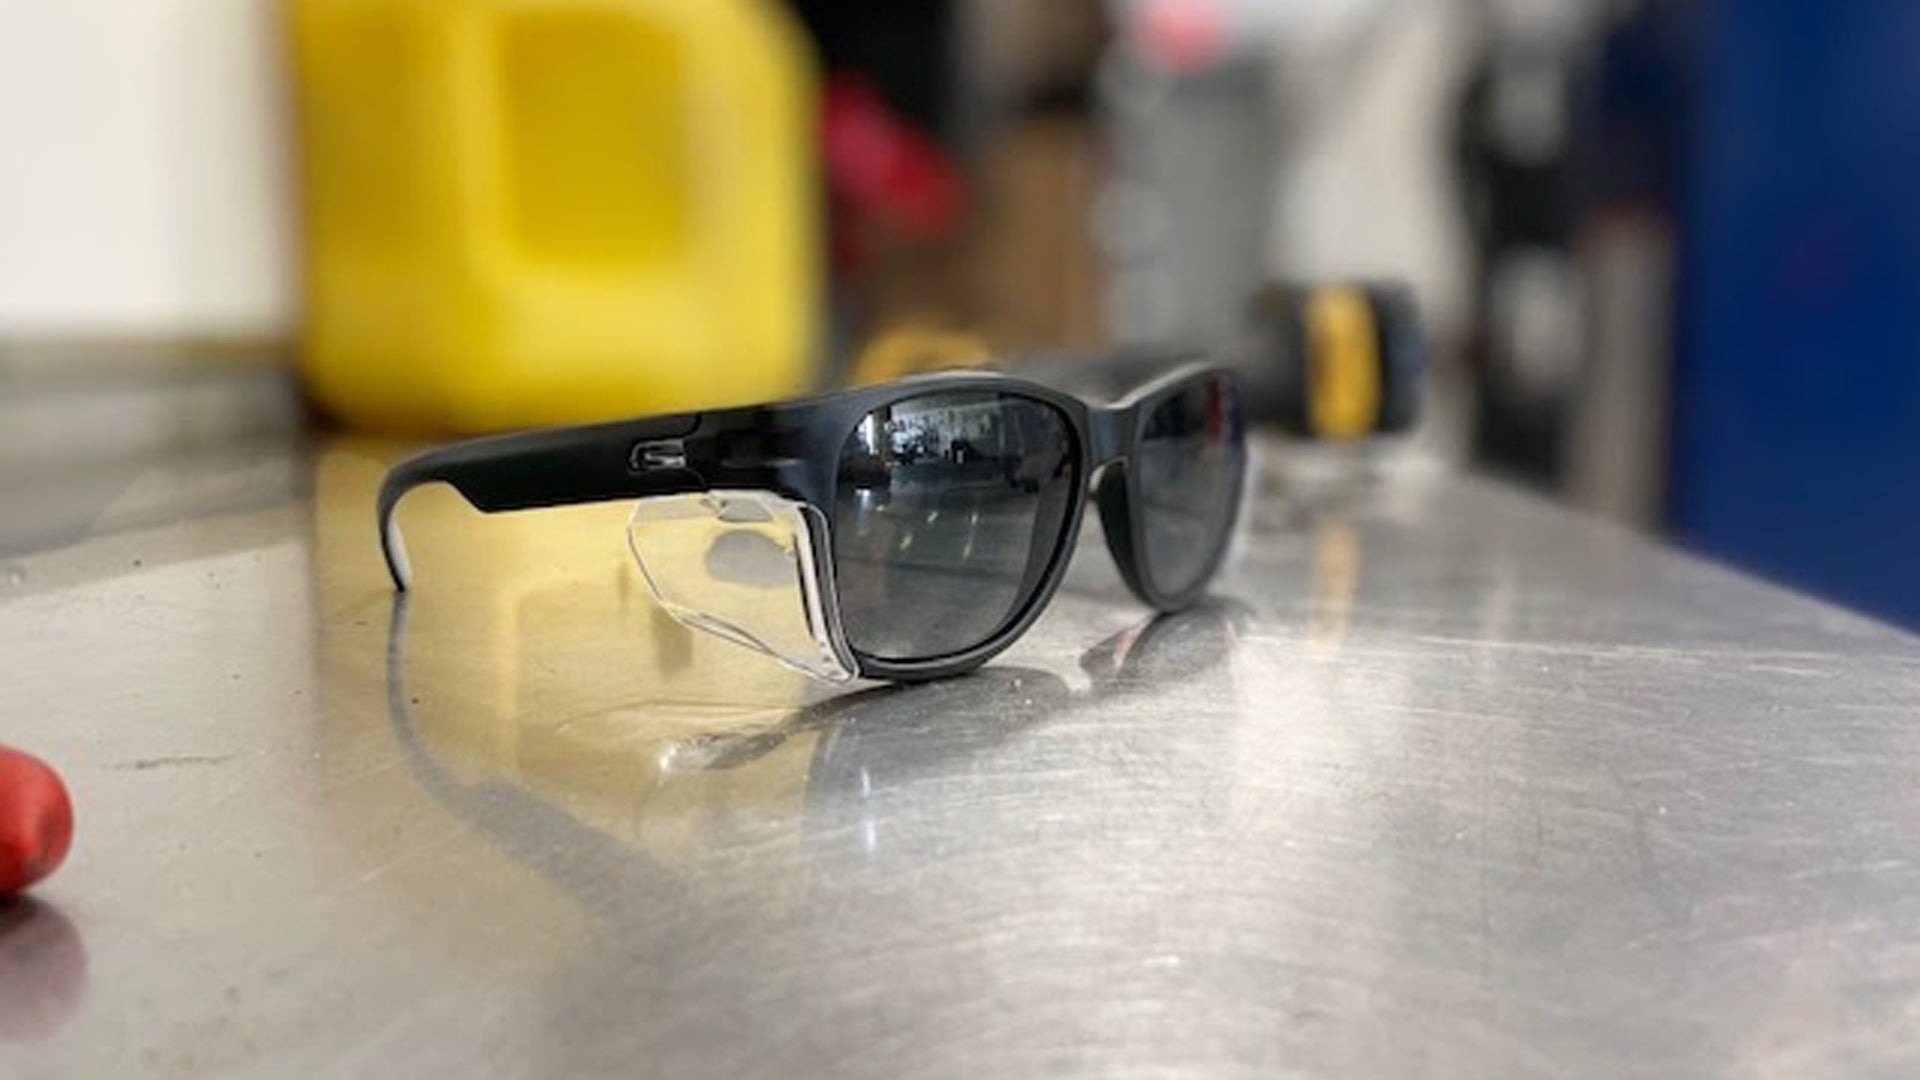 Z87 Unbreakable Safety Glasses Sunglasses SUPER DARK Lens No More Broken Glasses 